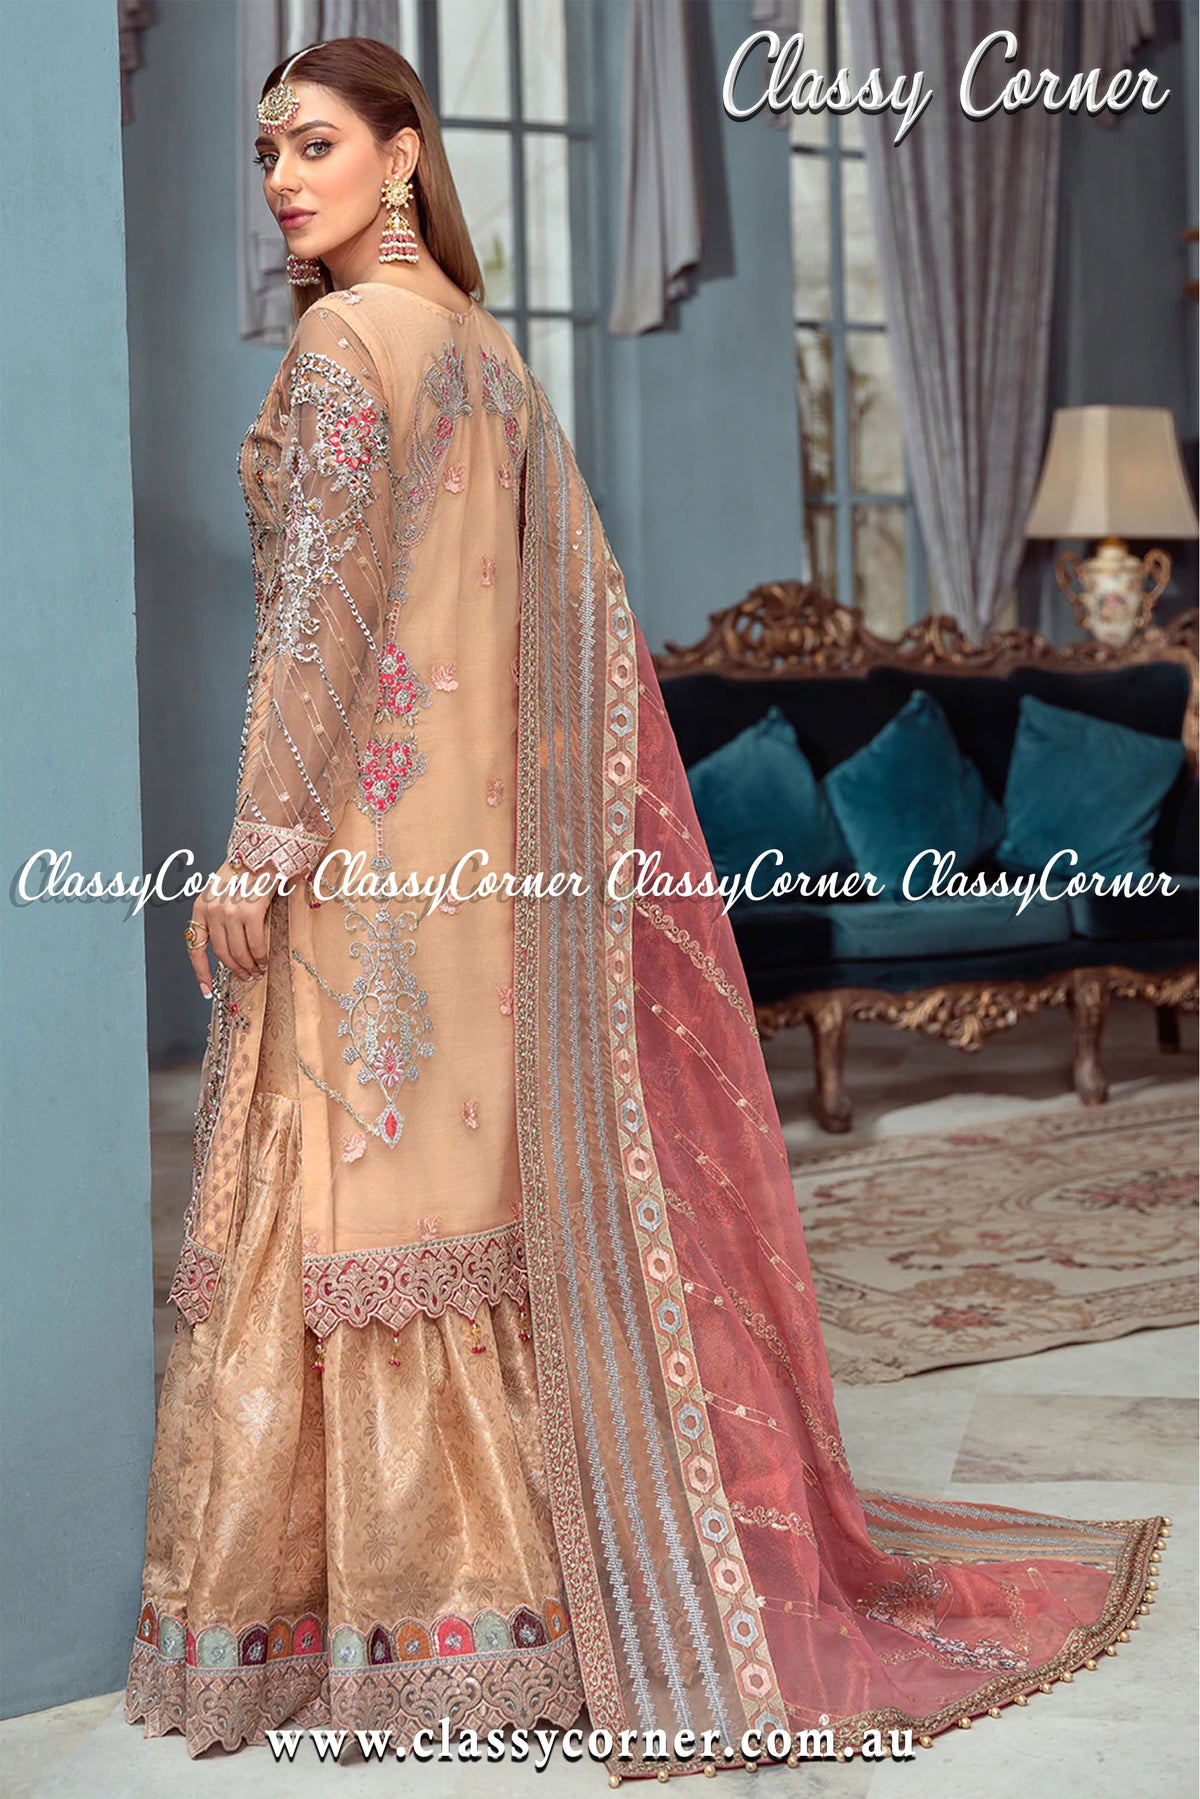 Beige Pink Pakistani Outfit - Classy Corner